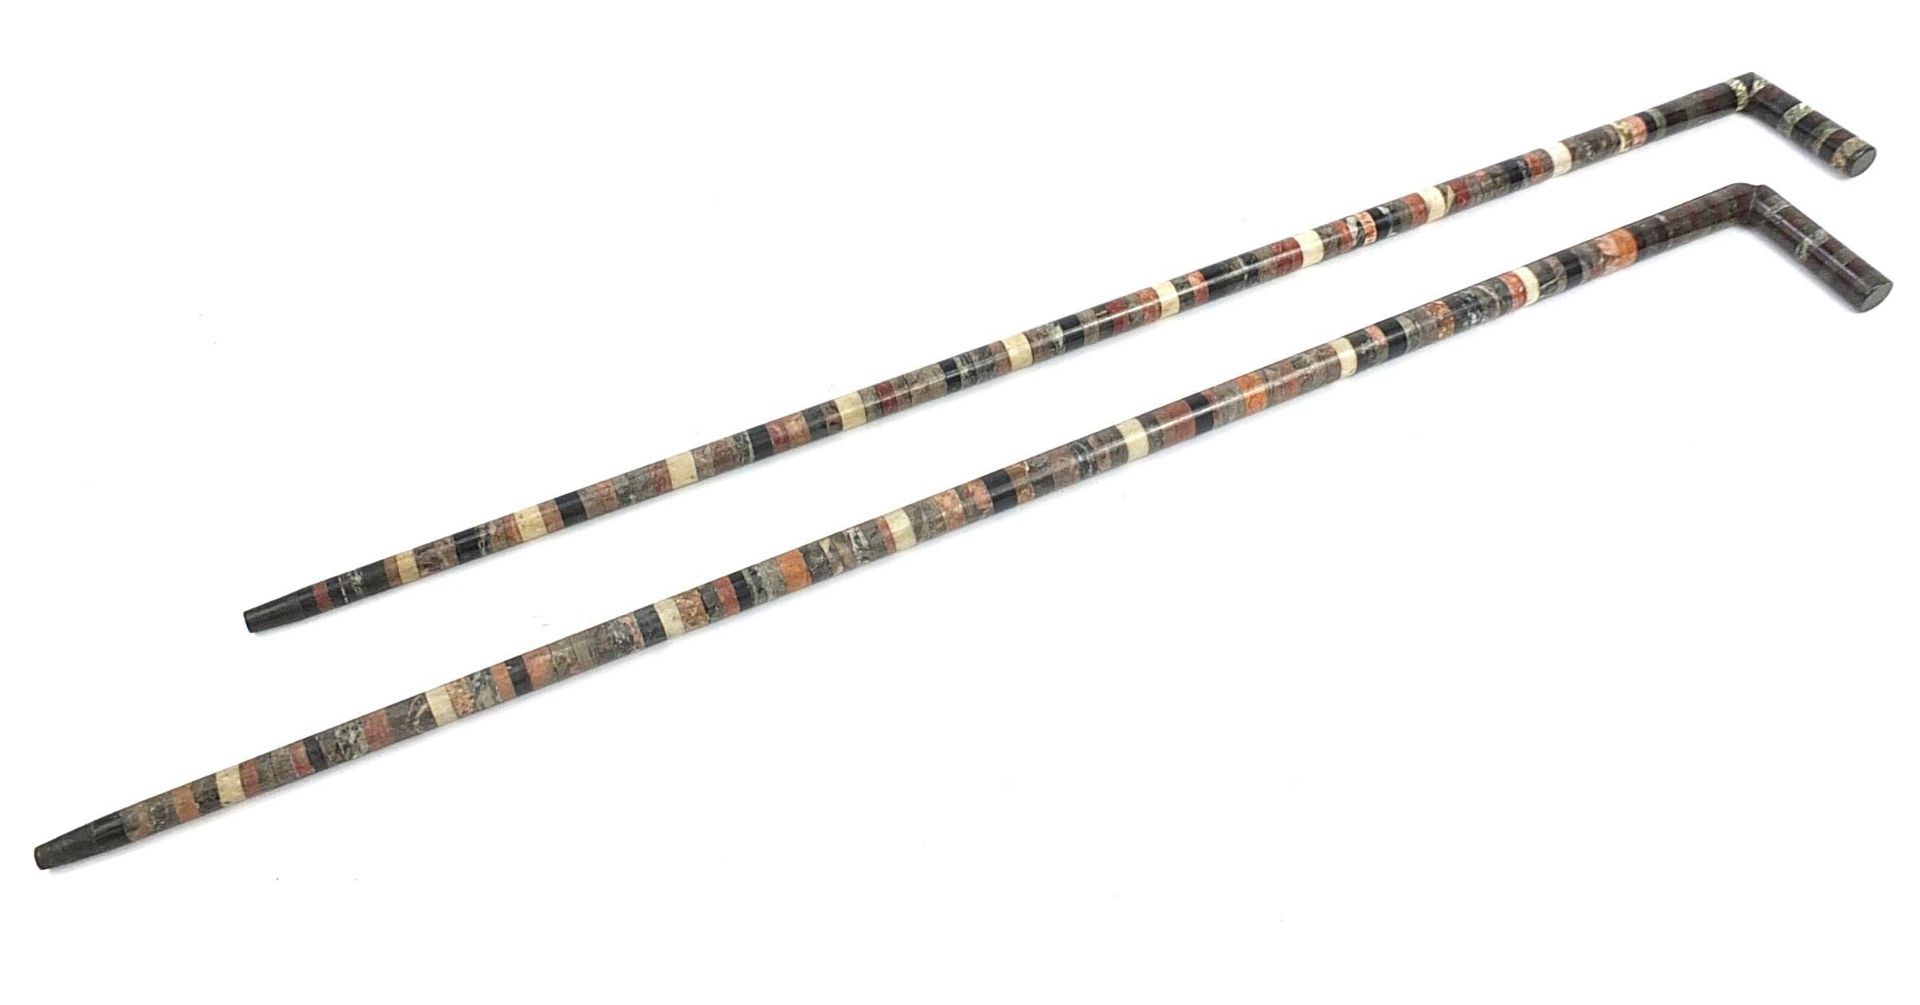 Pair of specimen marble sectional walking sticks, each 89.5cm in length - Image 2 of 3